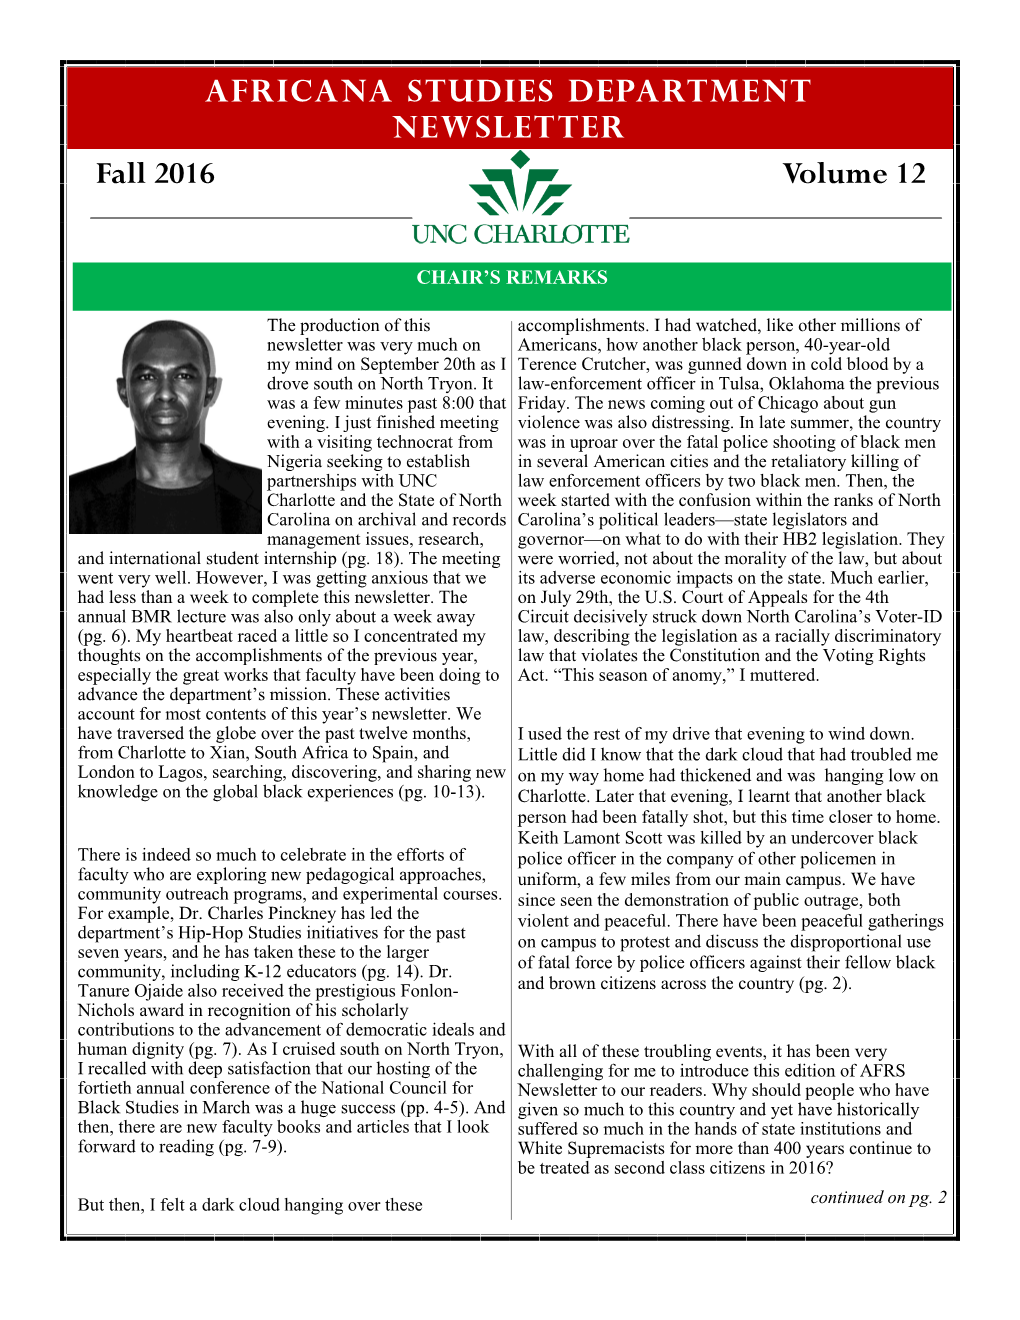 Department of Africana Studies 2016 Newsletter